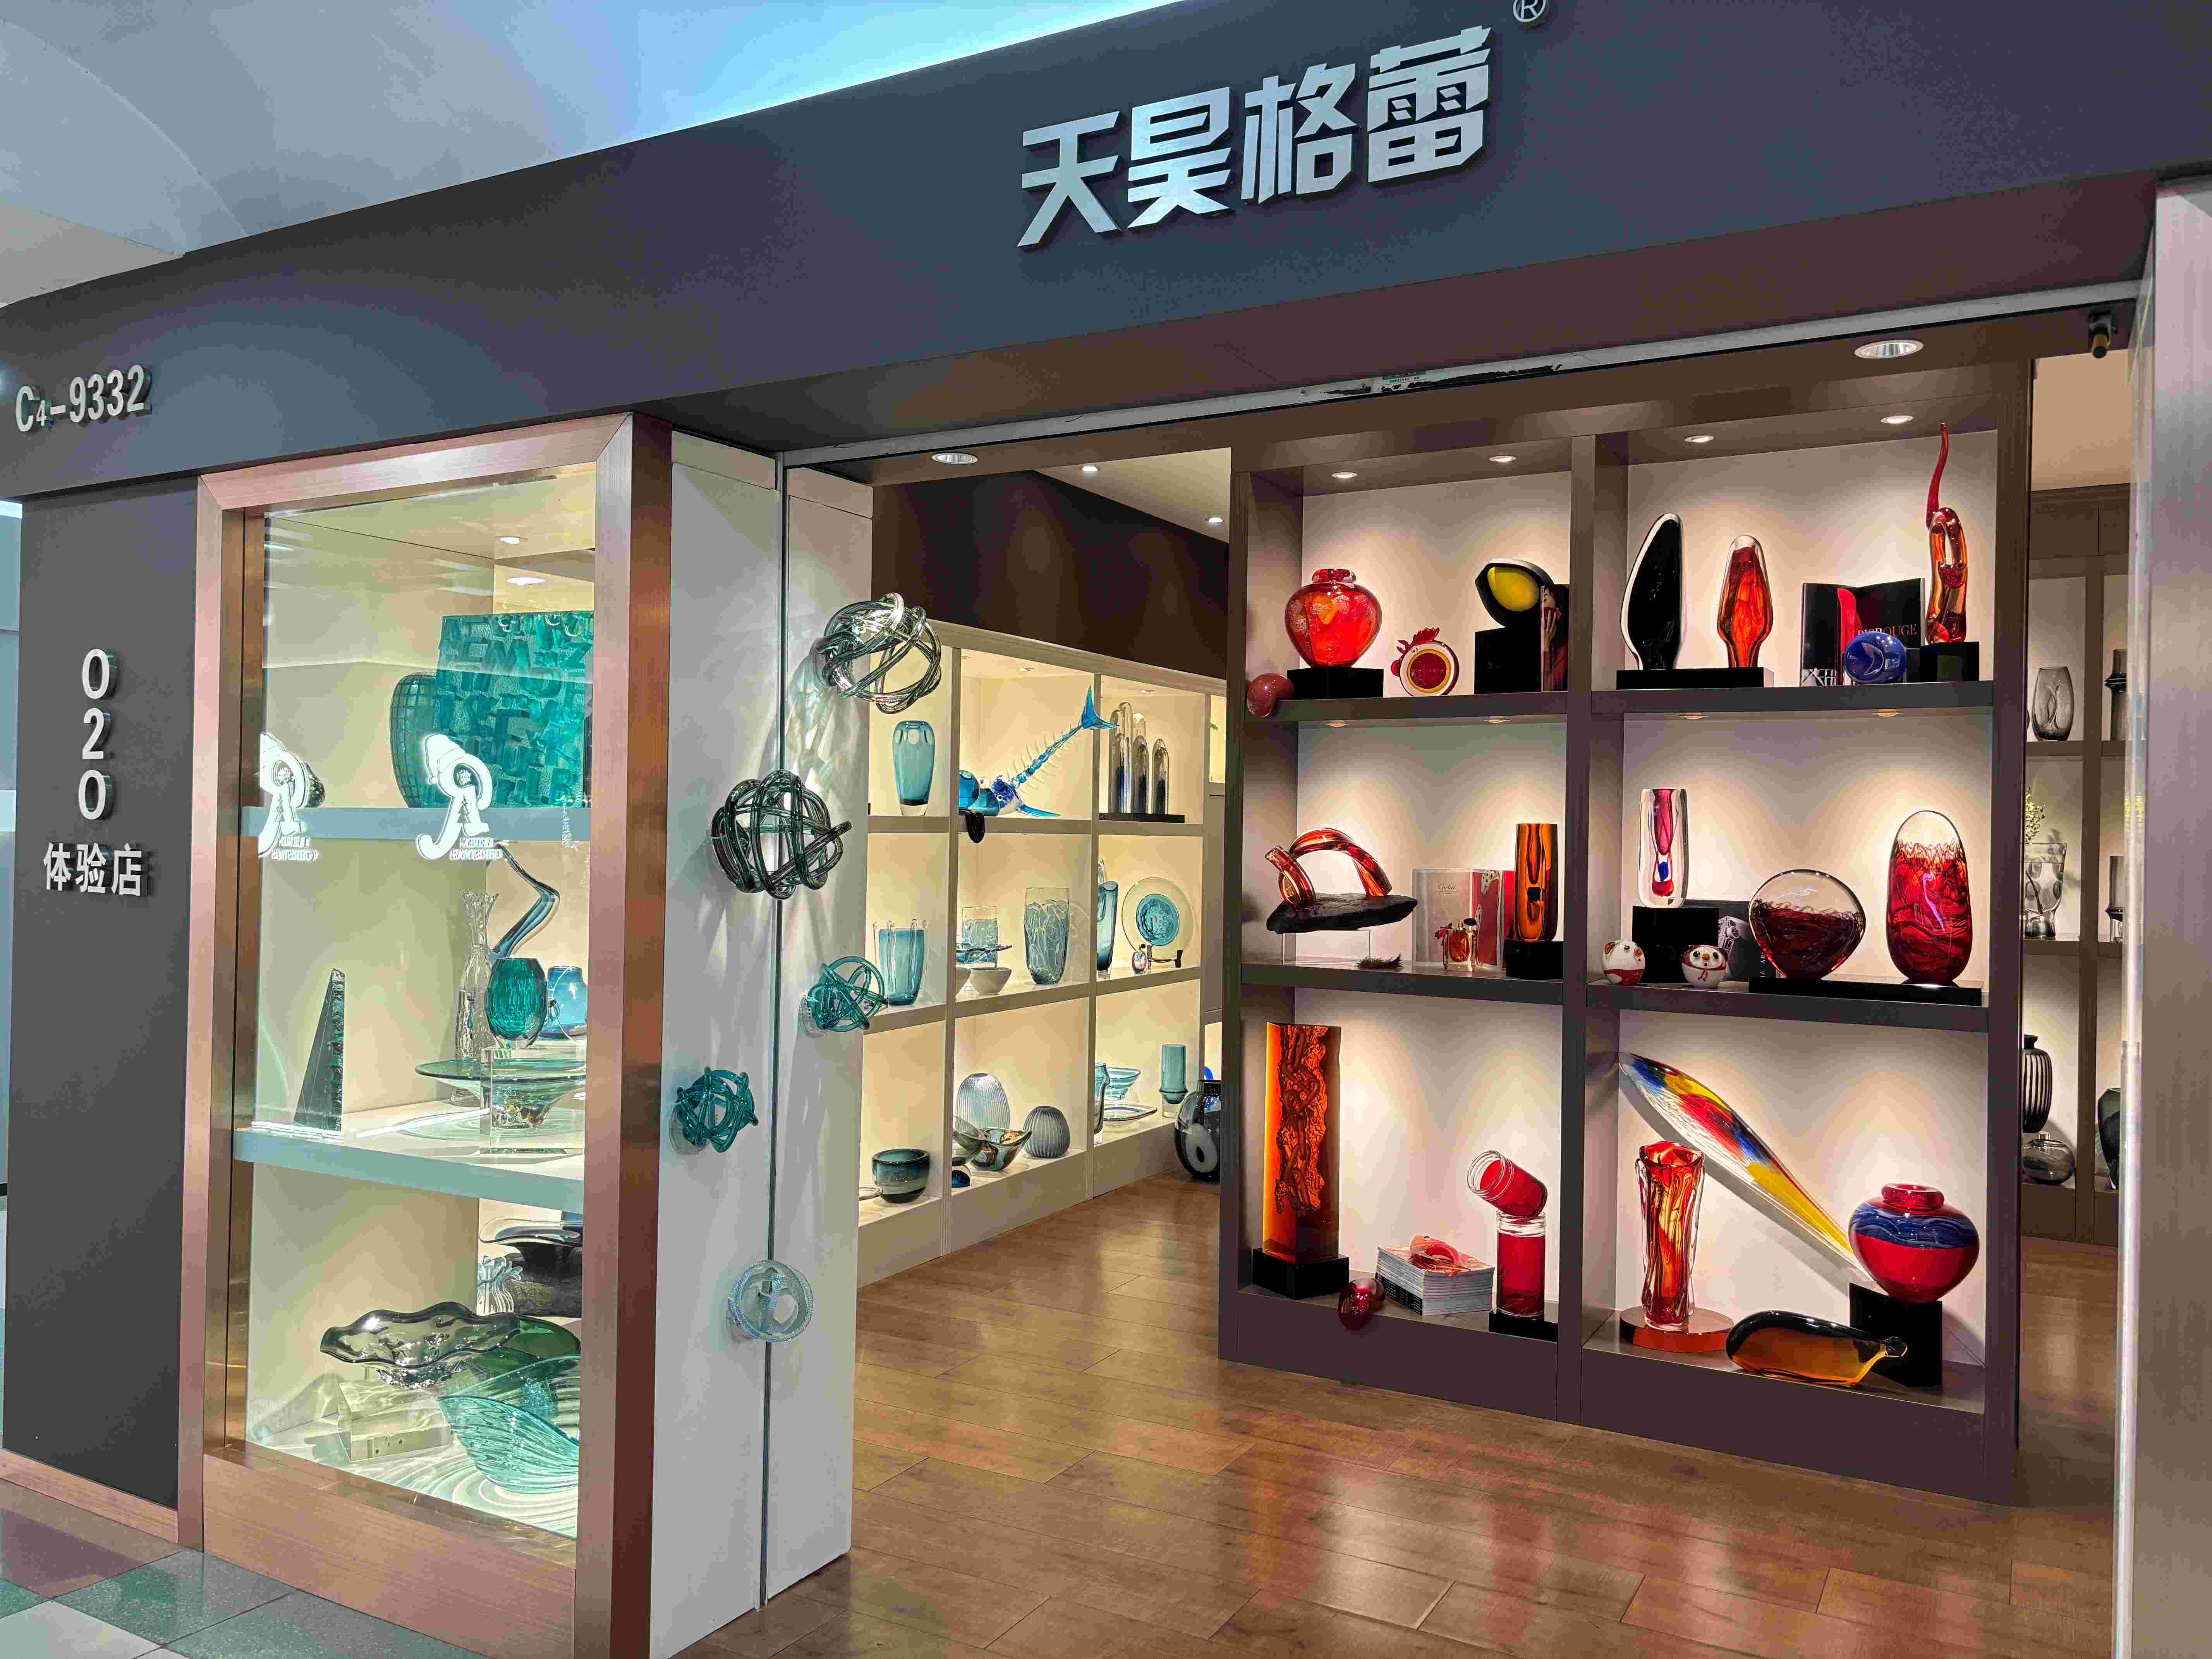 TianHao-Glaze-Glass-Handicrafts-Wholesale-Yiwu-Market-China-C4-9332